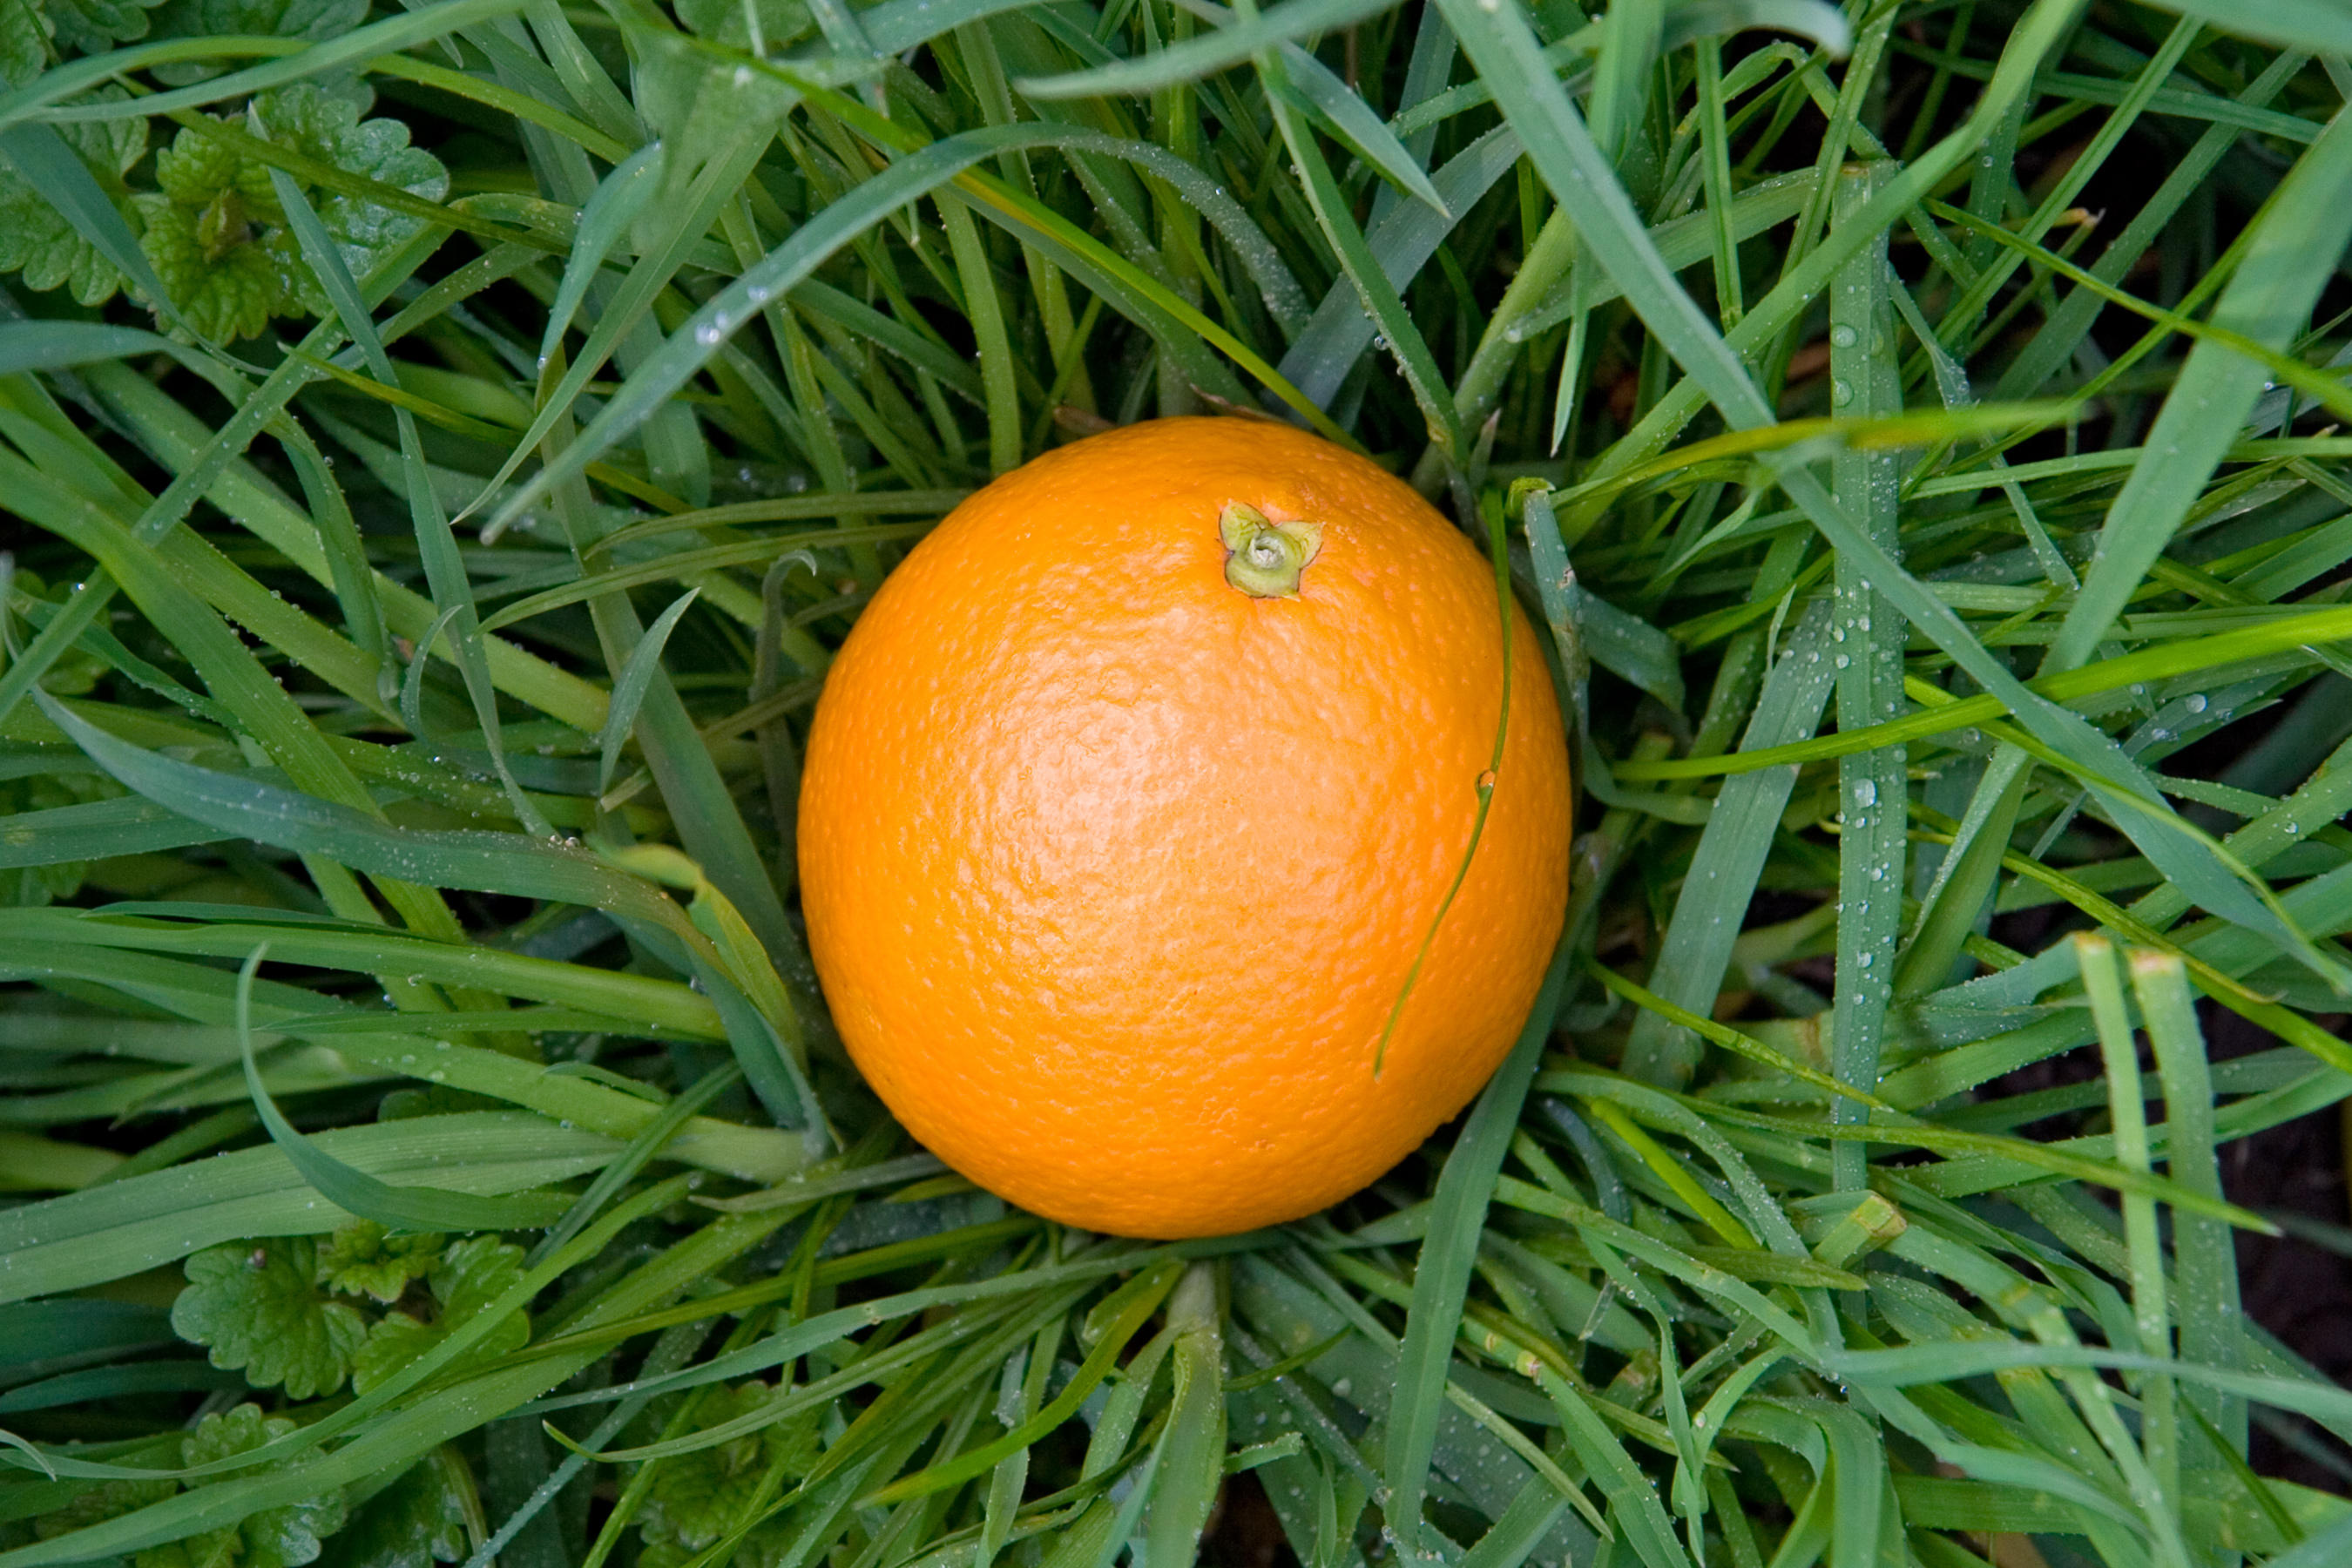 Orange fruit in the grass